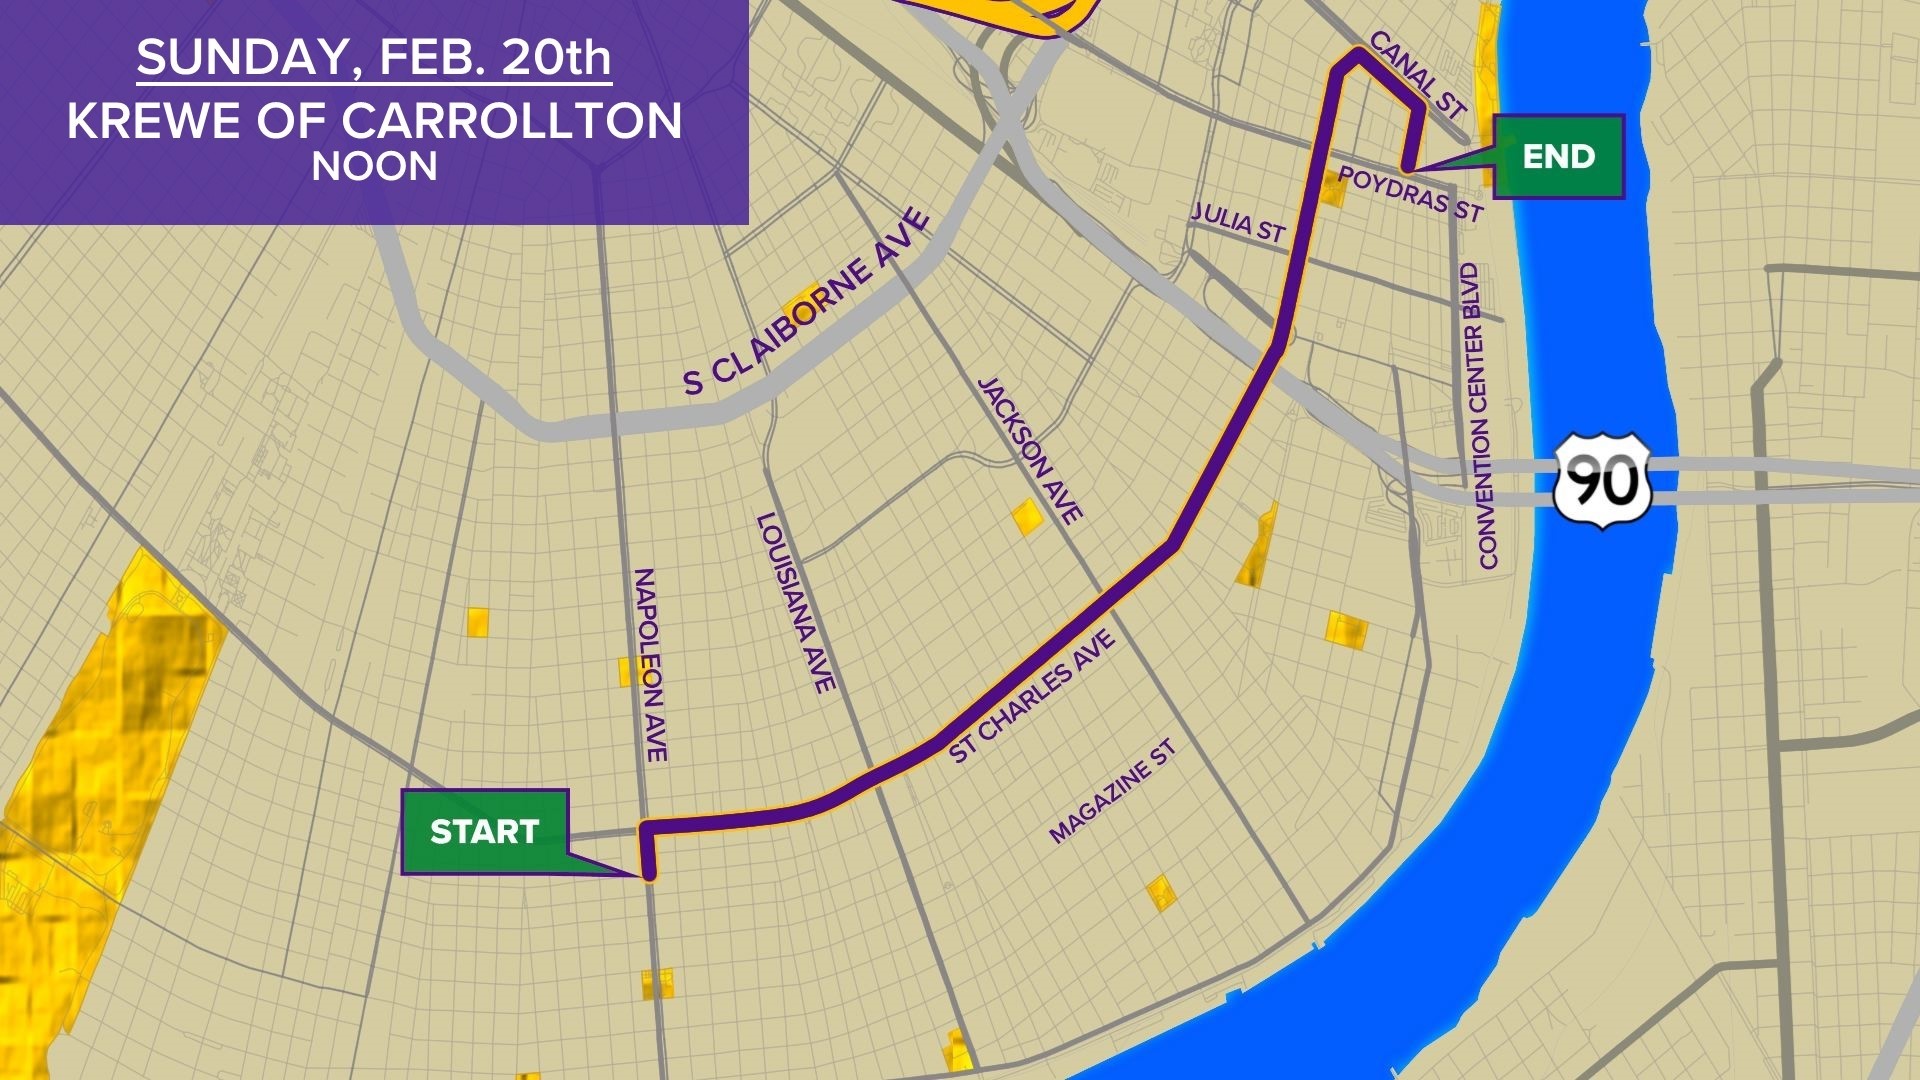 Krewe of Carrollton parade route, start time